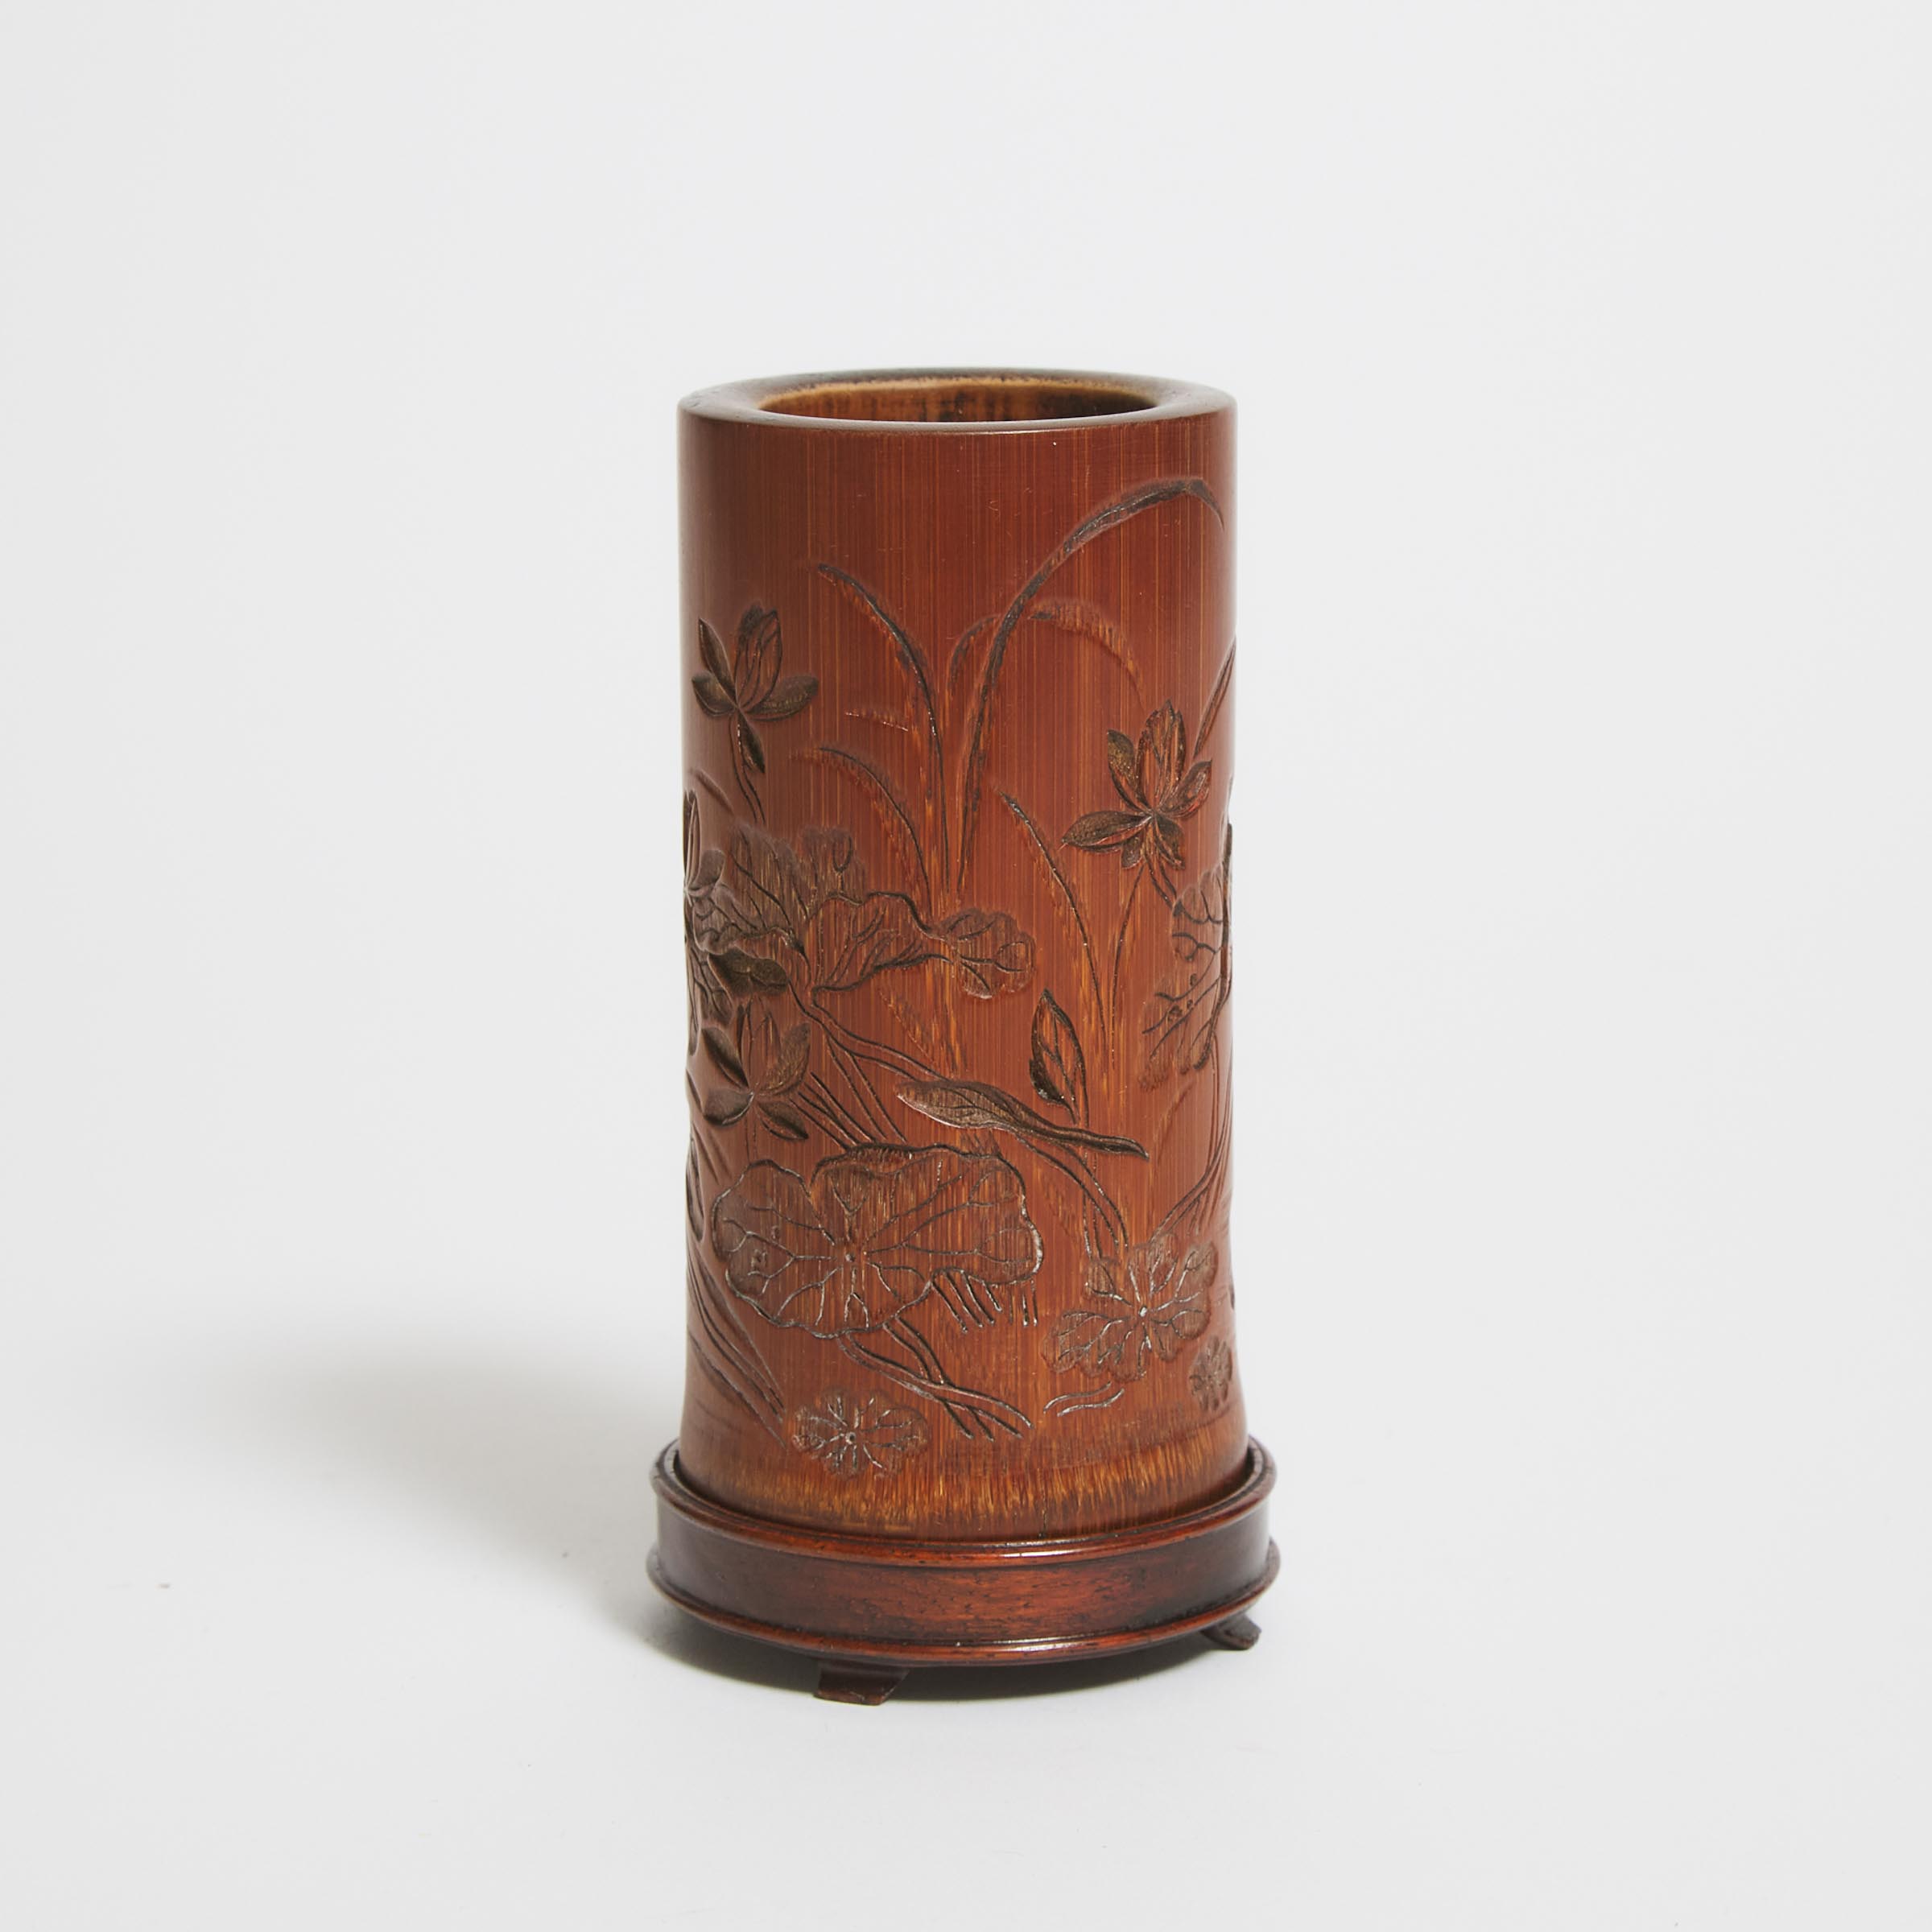 A Small Bamboo Brush Pot, 18th Century